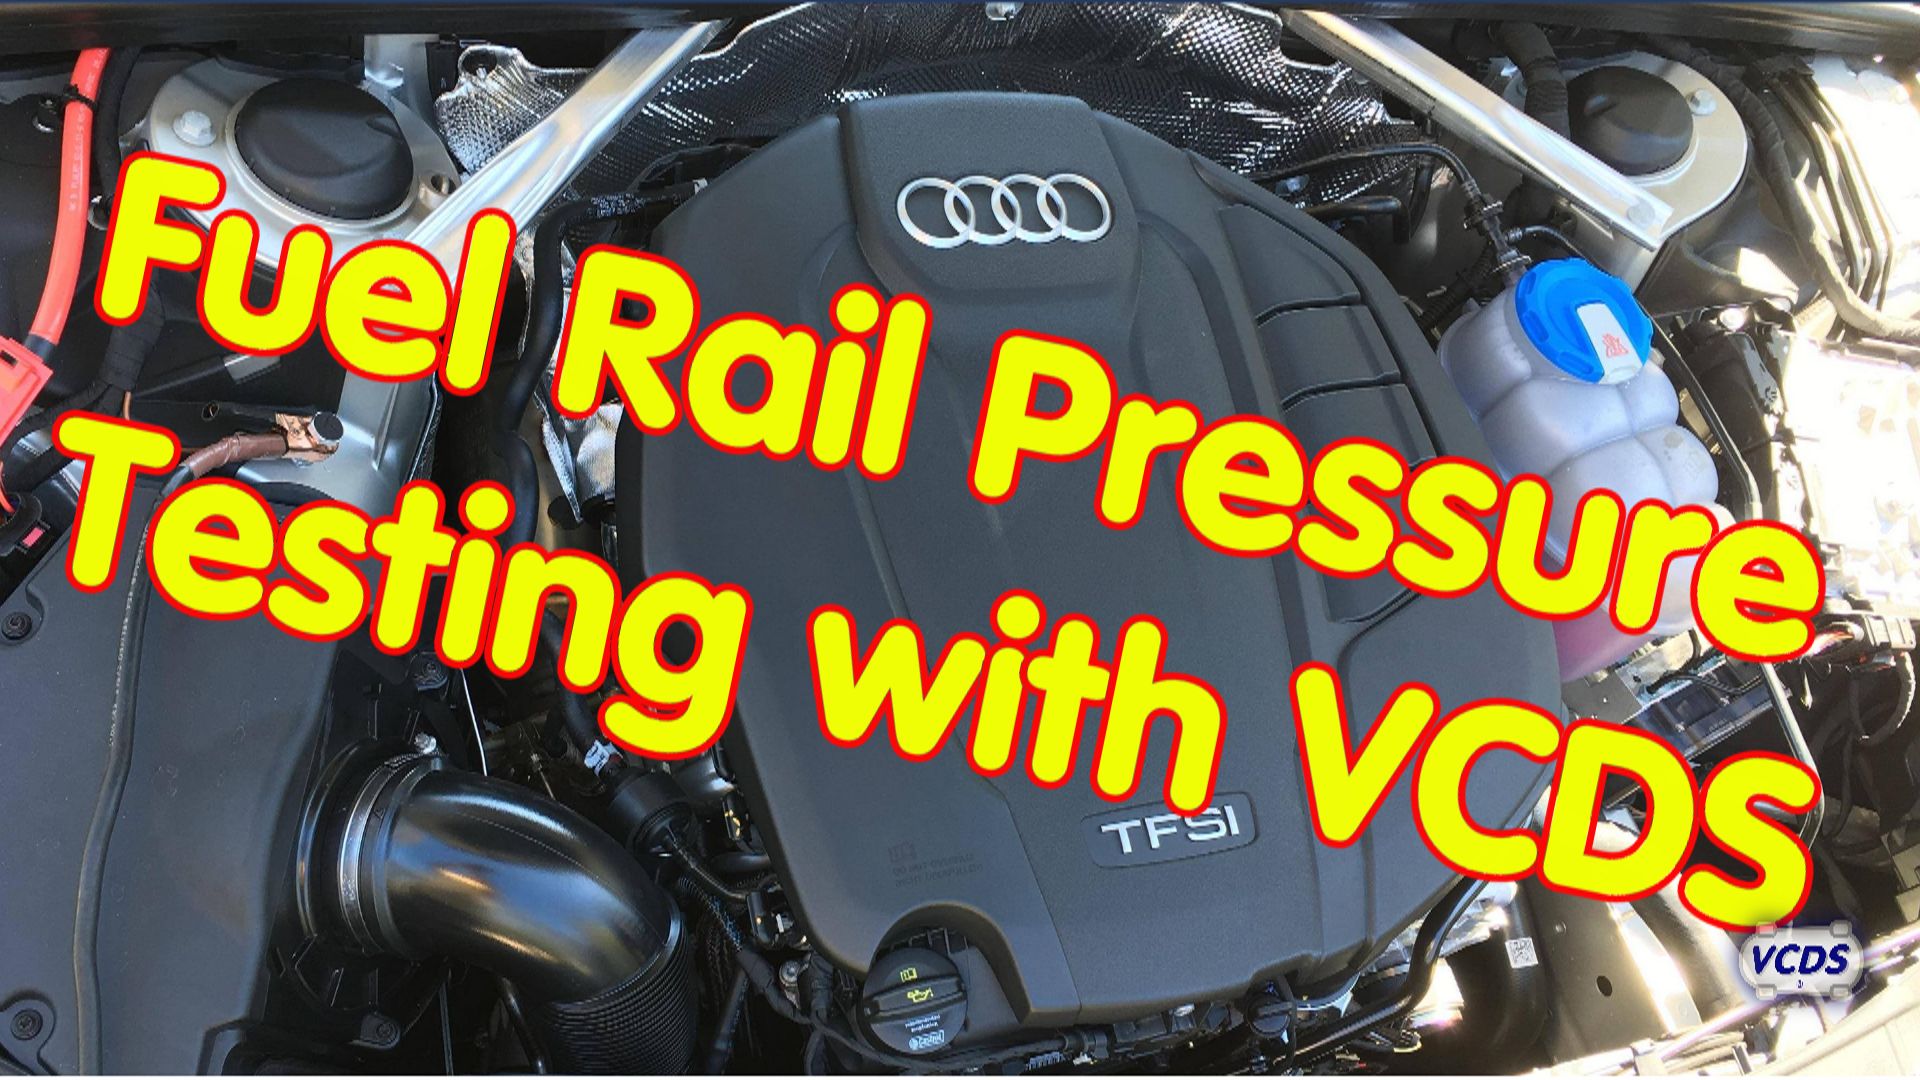 File:Title fuel rail pressure.jpg